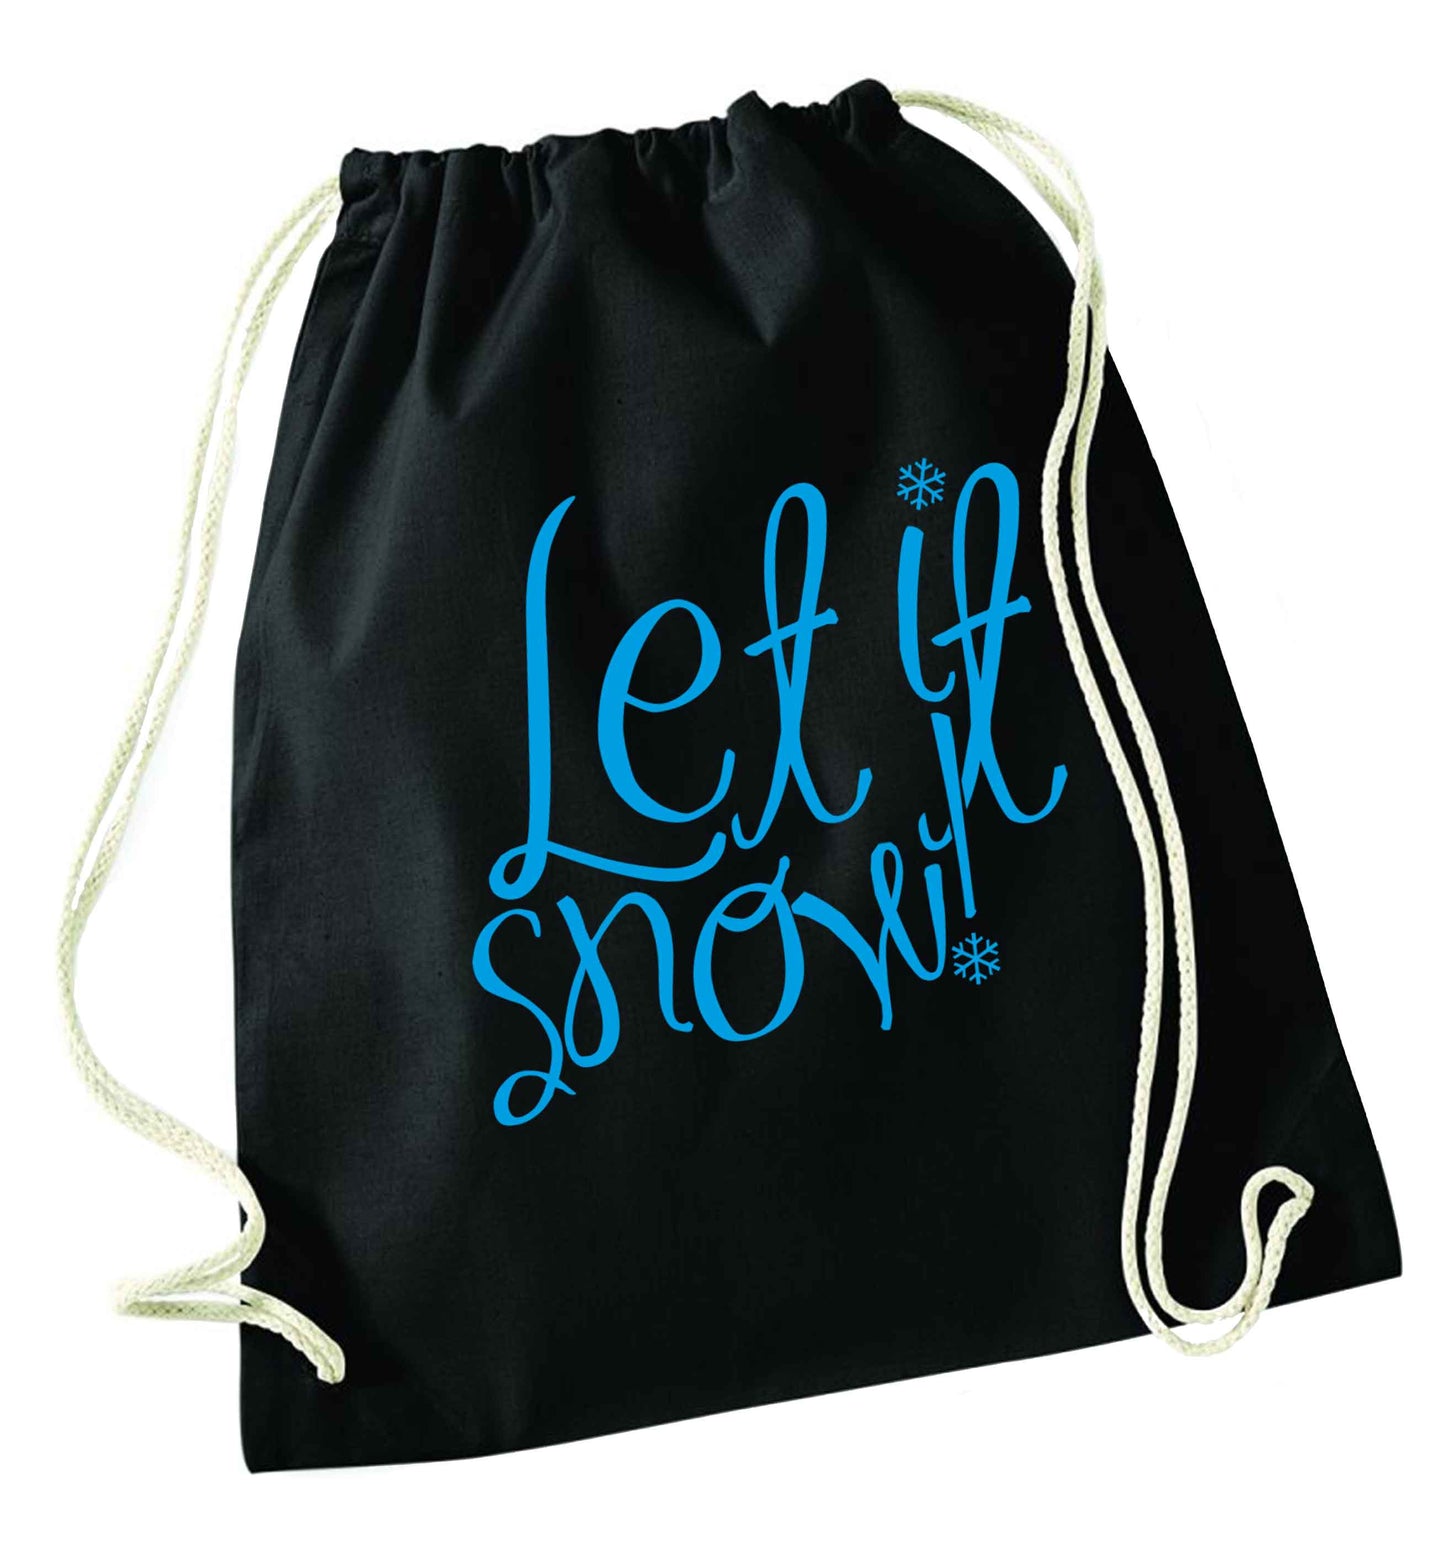 Let it snow black drawstring bag